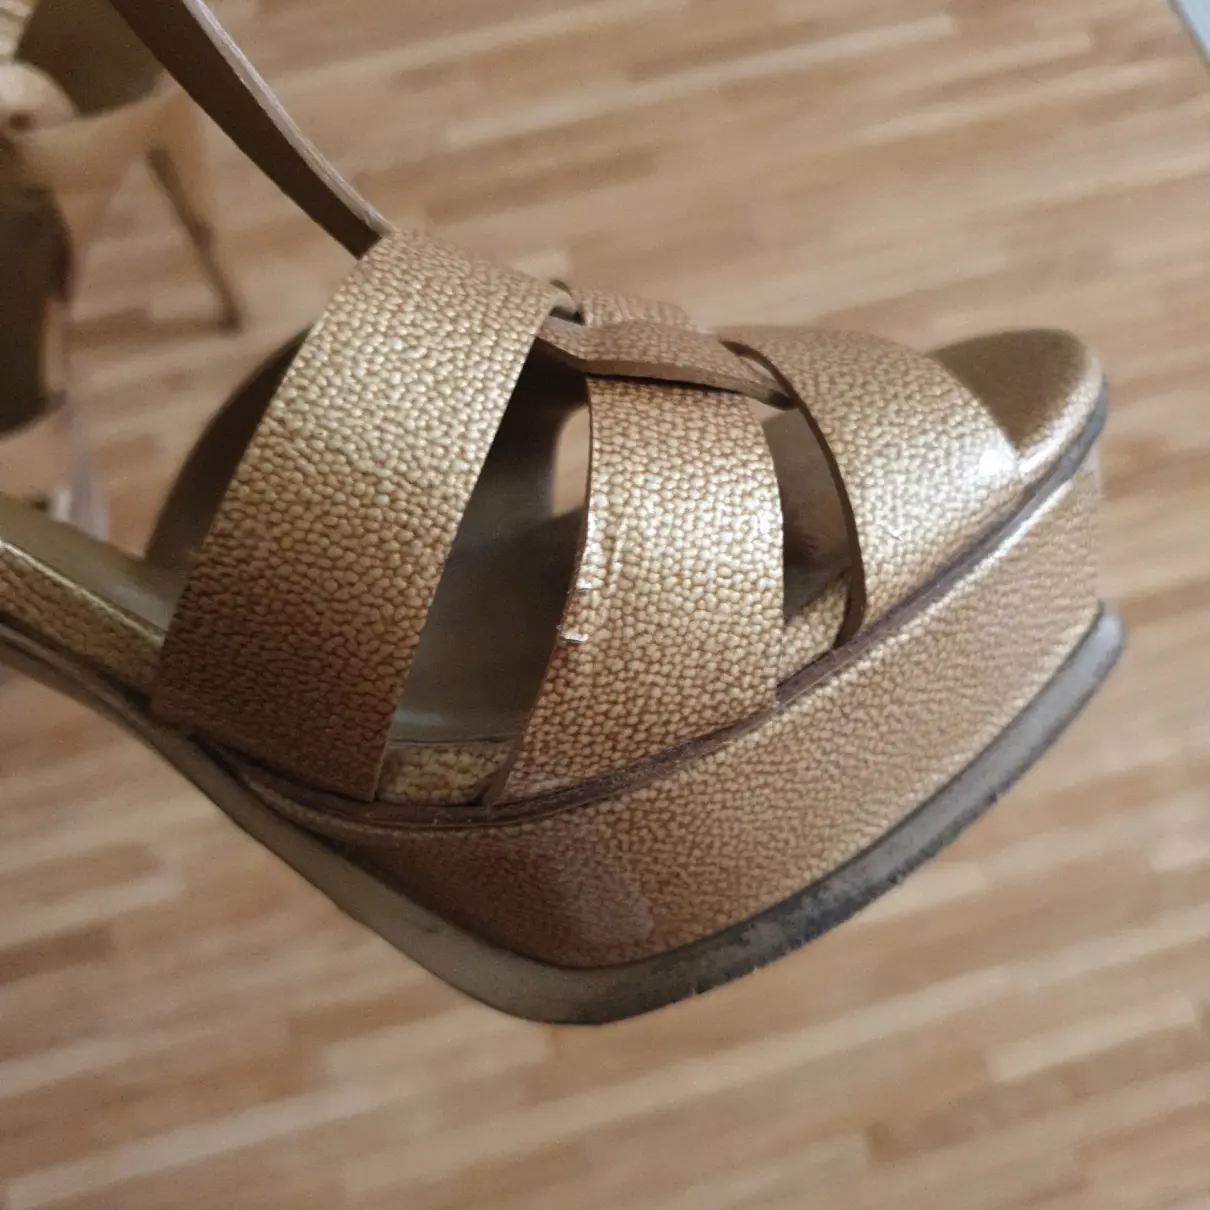 Buy Yves Saint Laurent Tribute patent leather sandals online